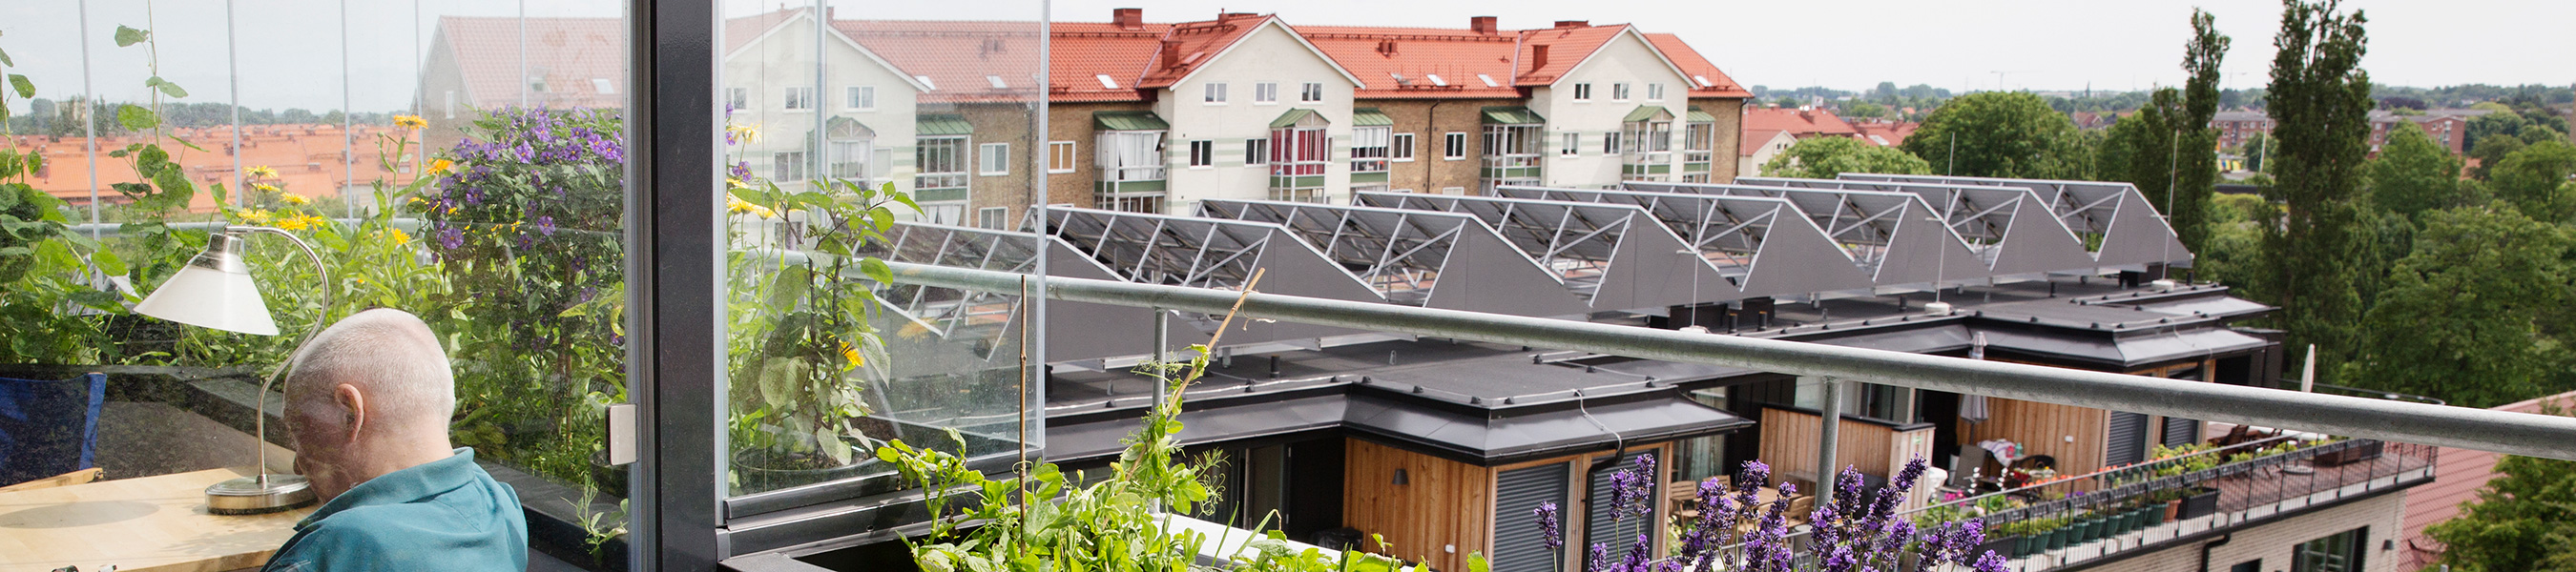 Med utsikt från balkongen i Greenhouse Augustenborg. Foto: Bojana Lukac